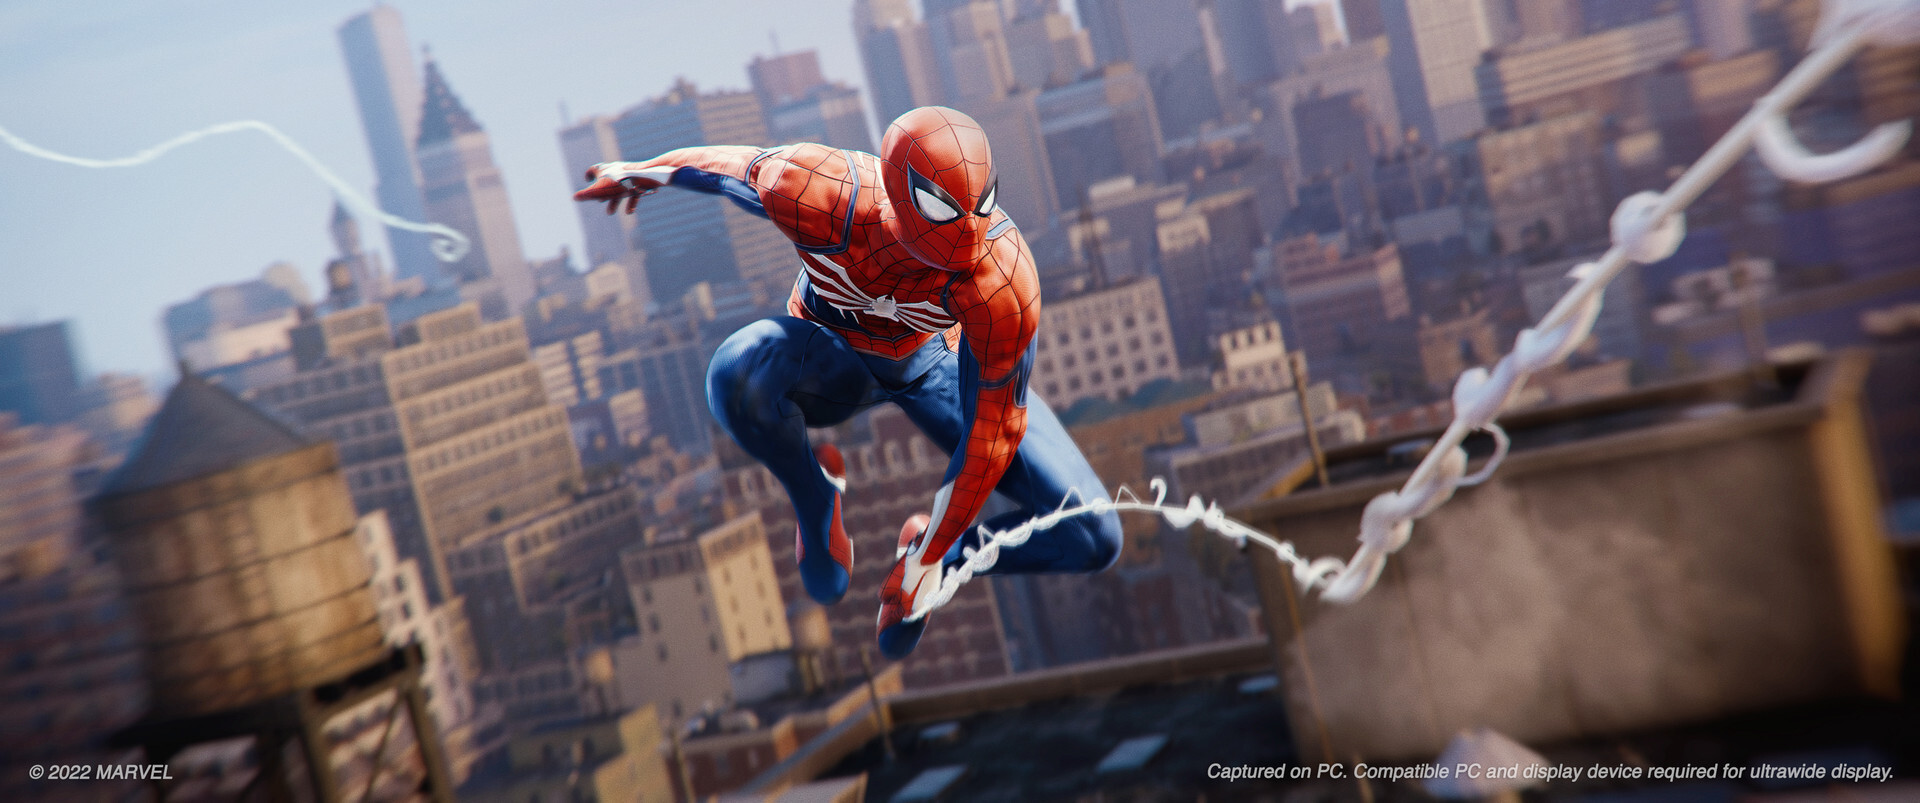 Marvel's Spider-Man Remastered Steam CD Key